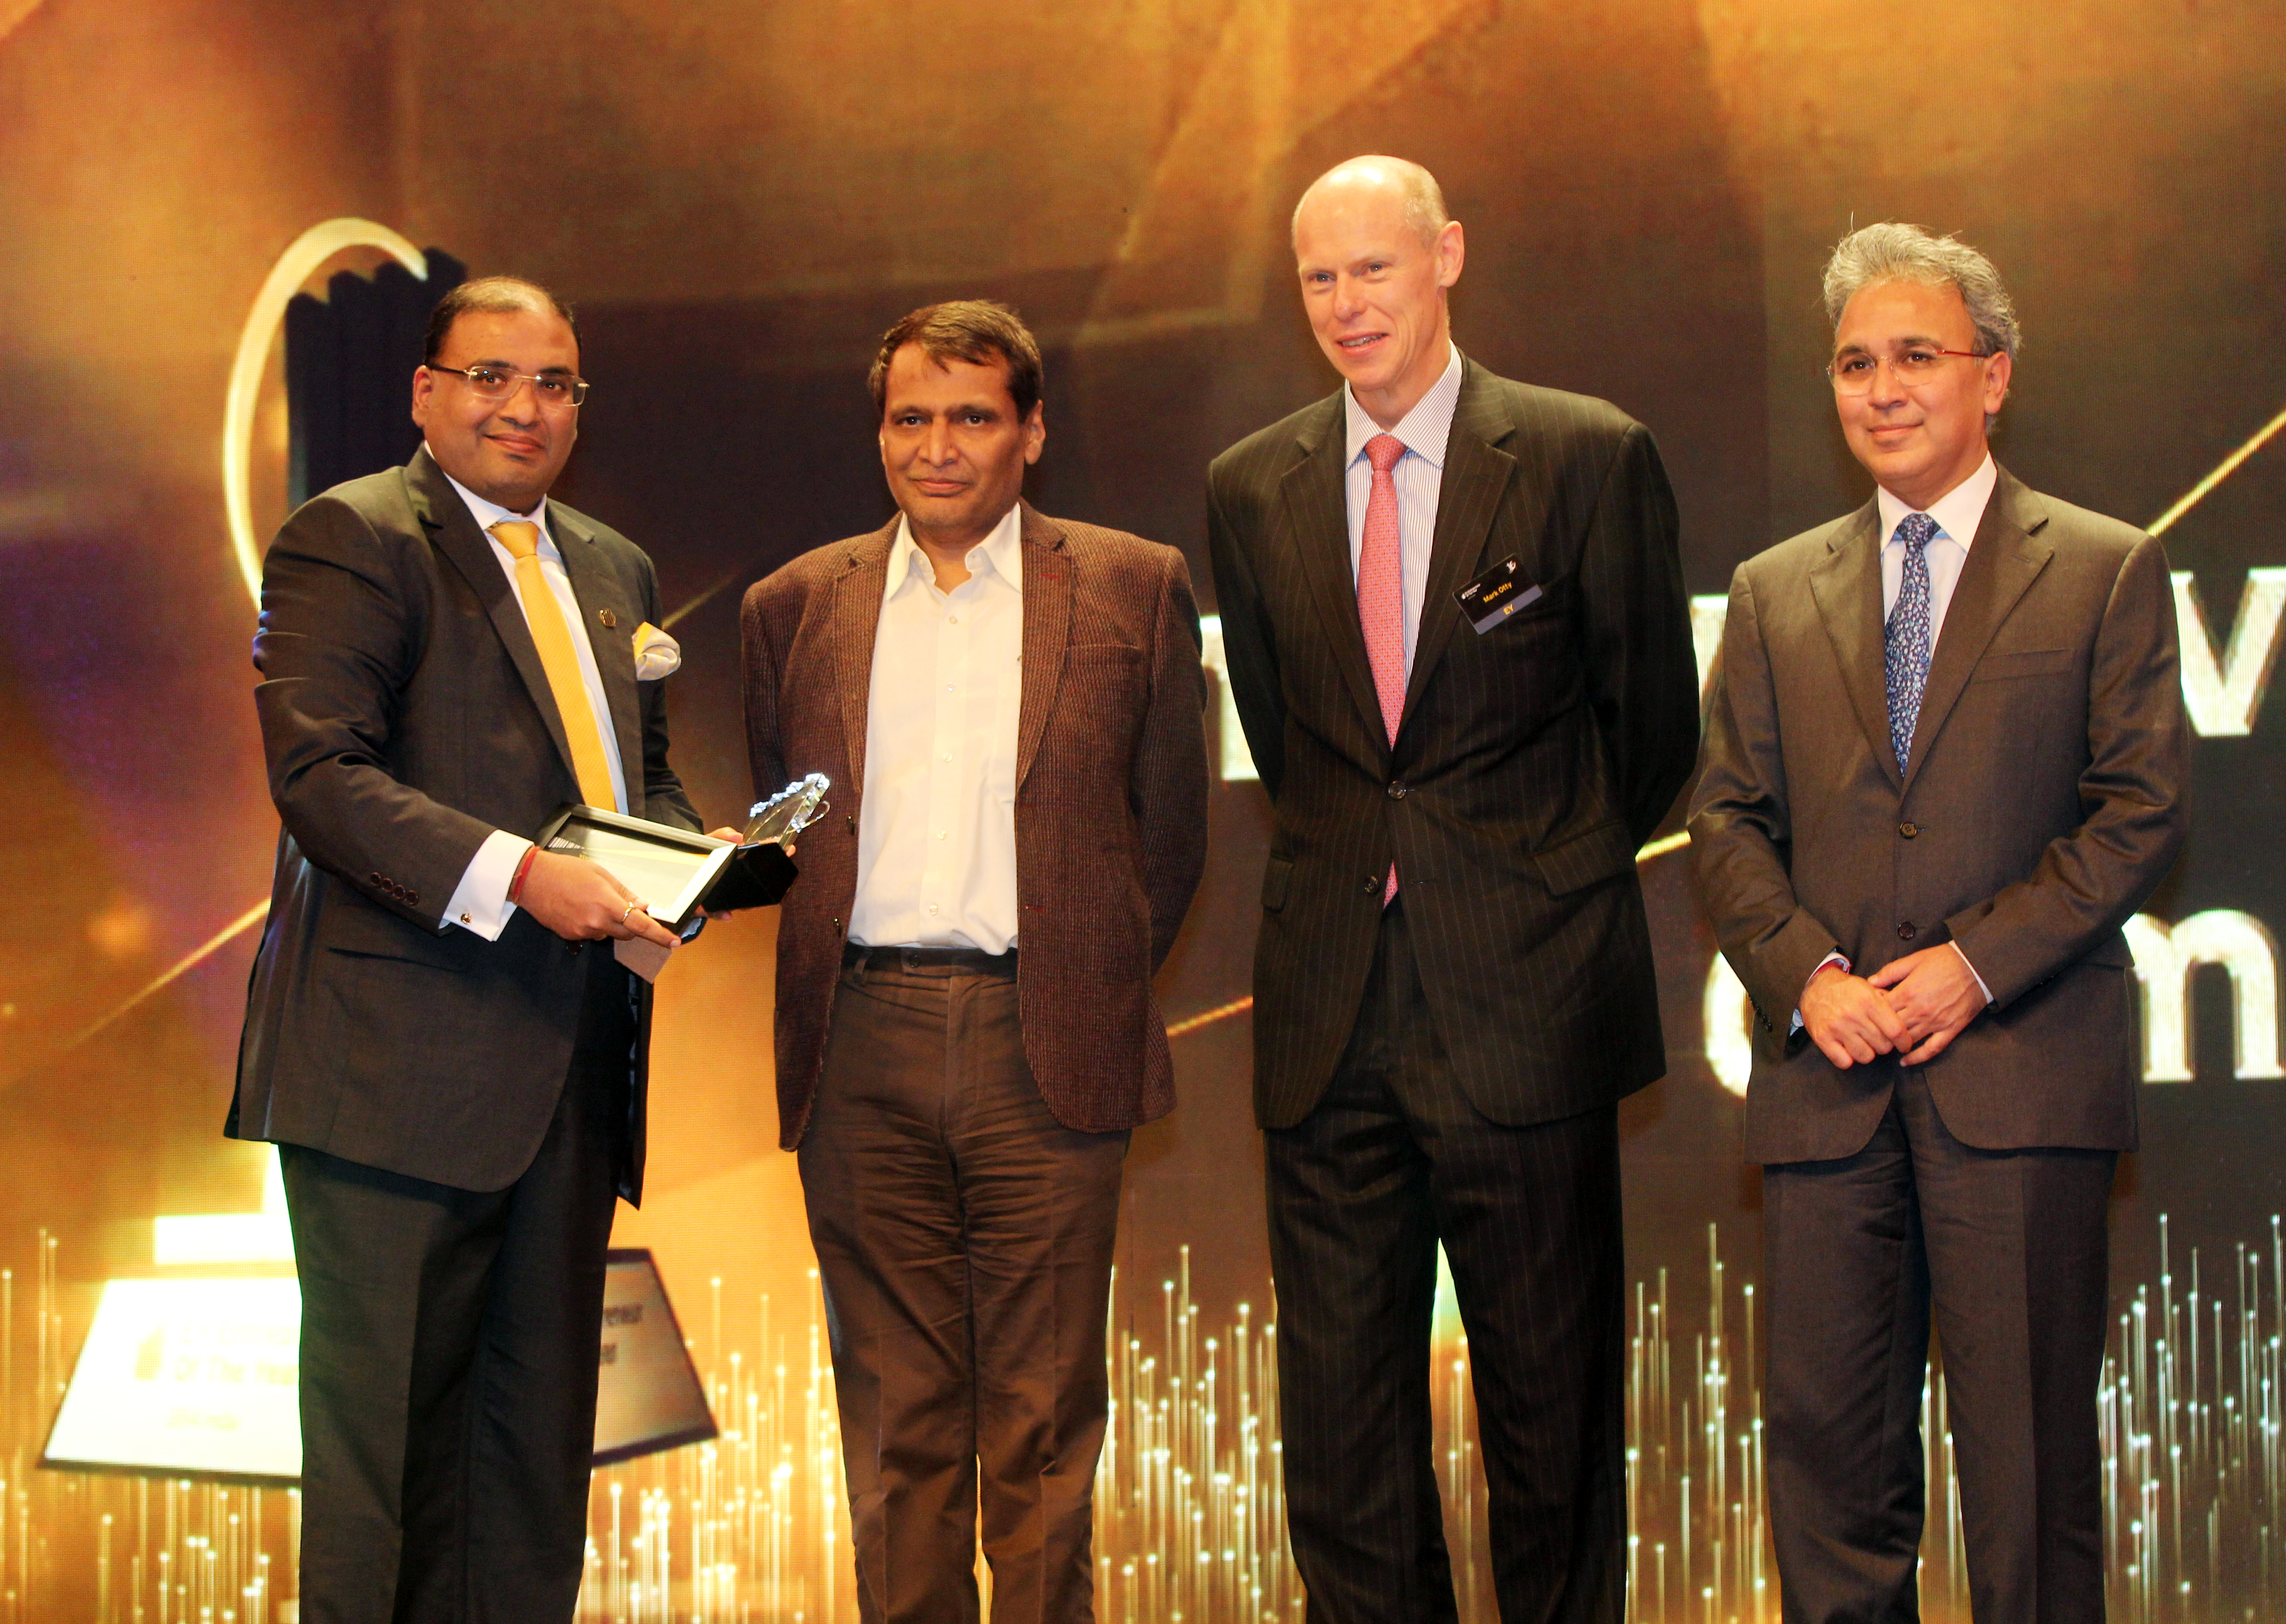 ATG’s Yogesh Mahansaria wins Ernst & Young Entrepreneur of the Year Awards 2014